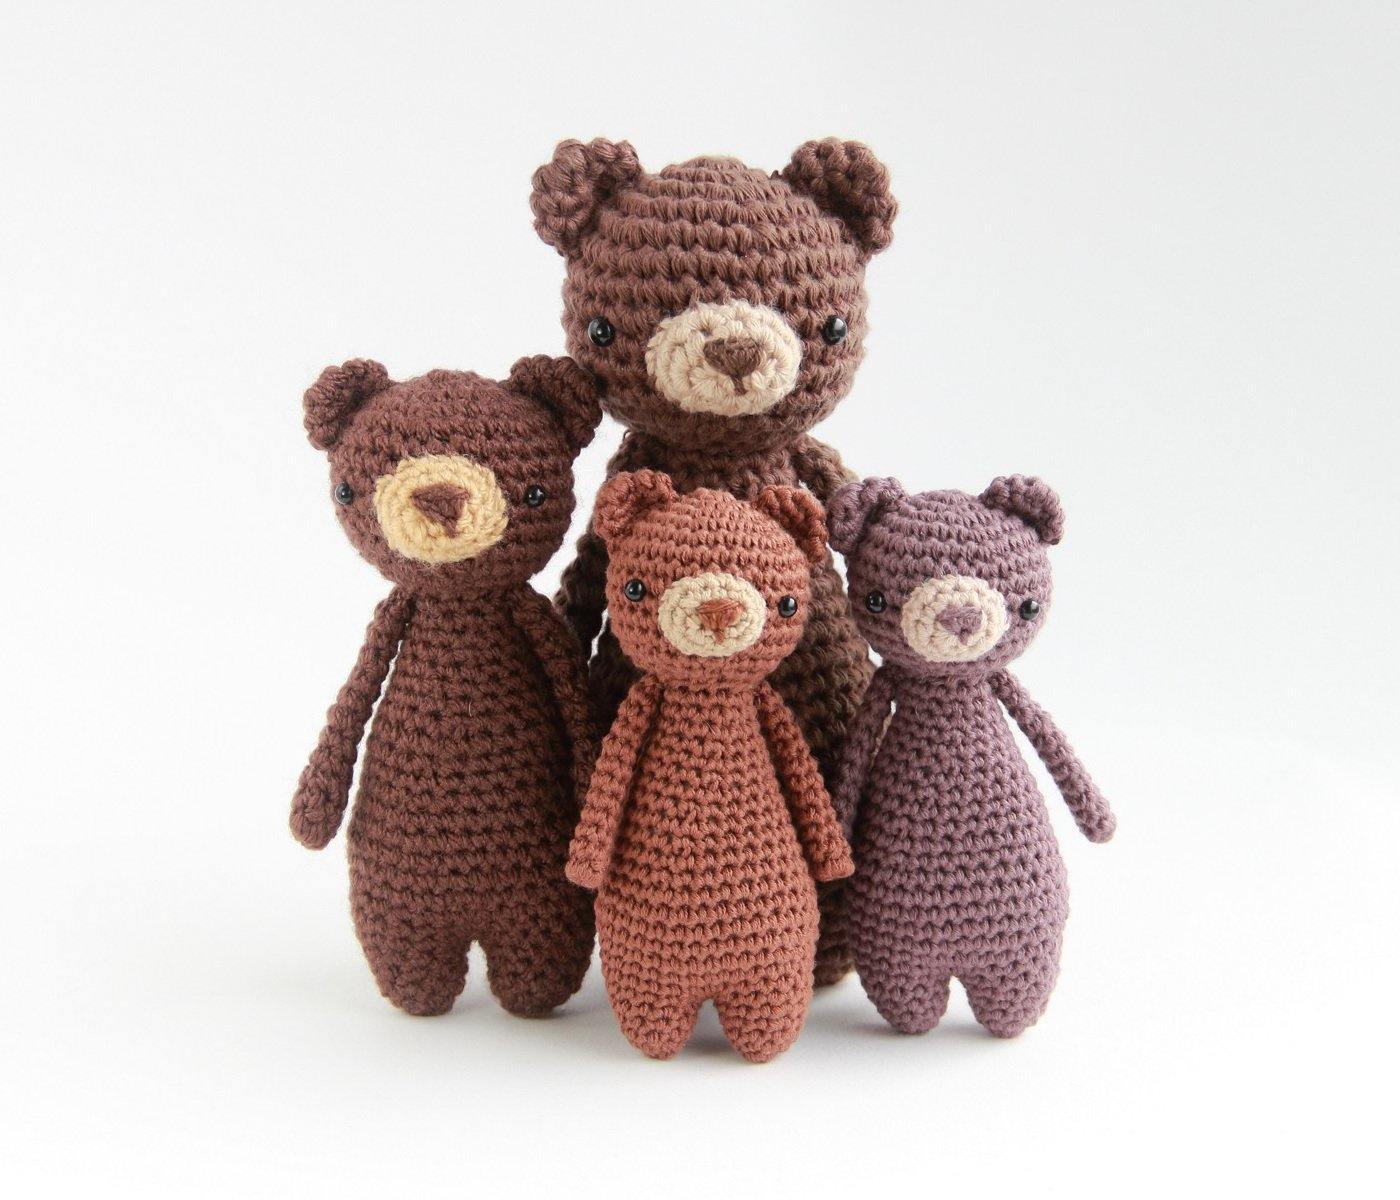 How to Start with Amigurumi - Little Bear Crochets